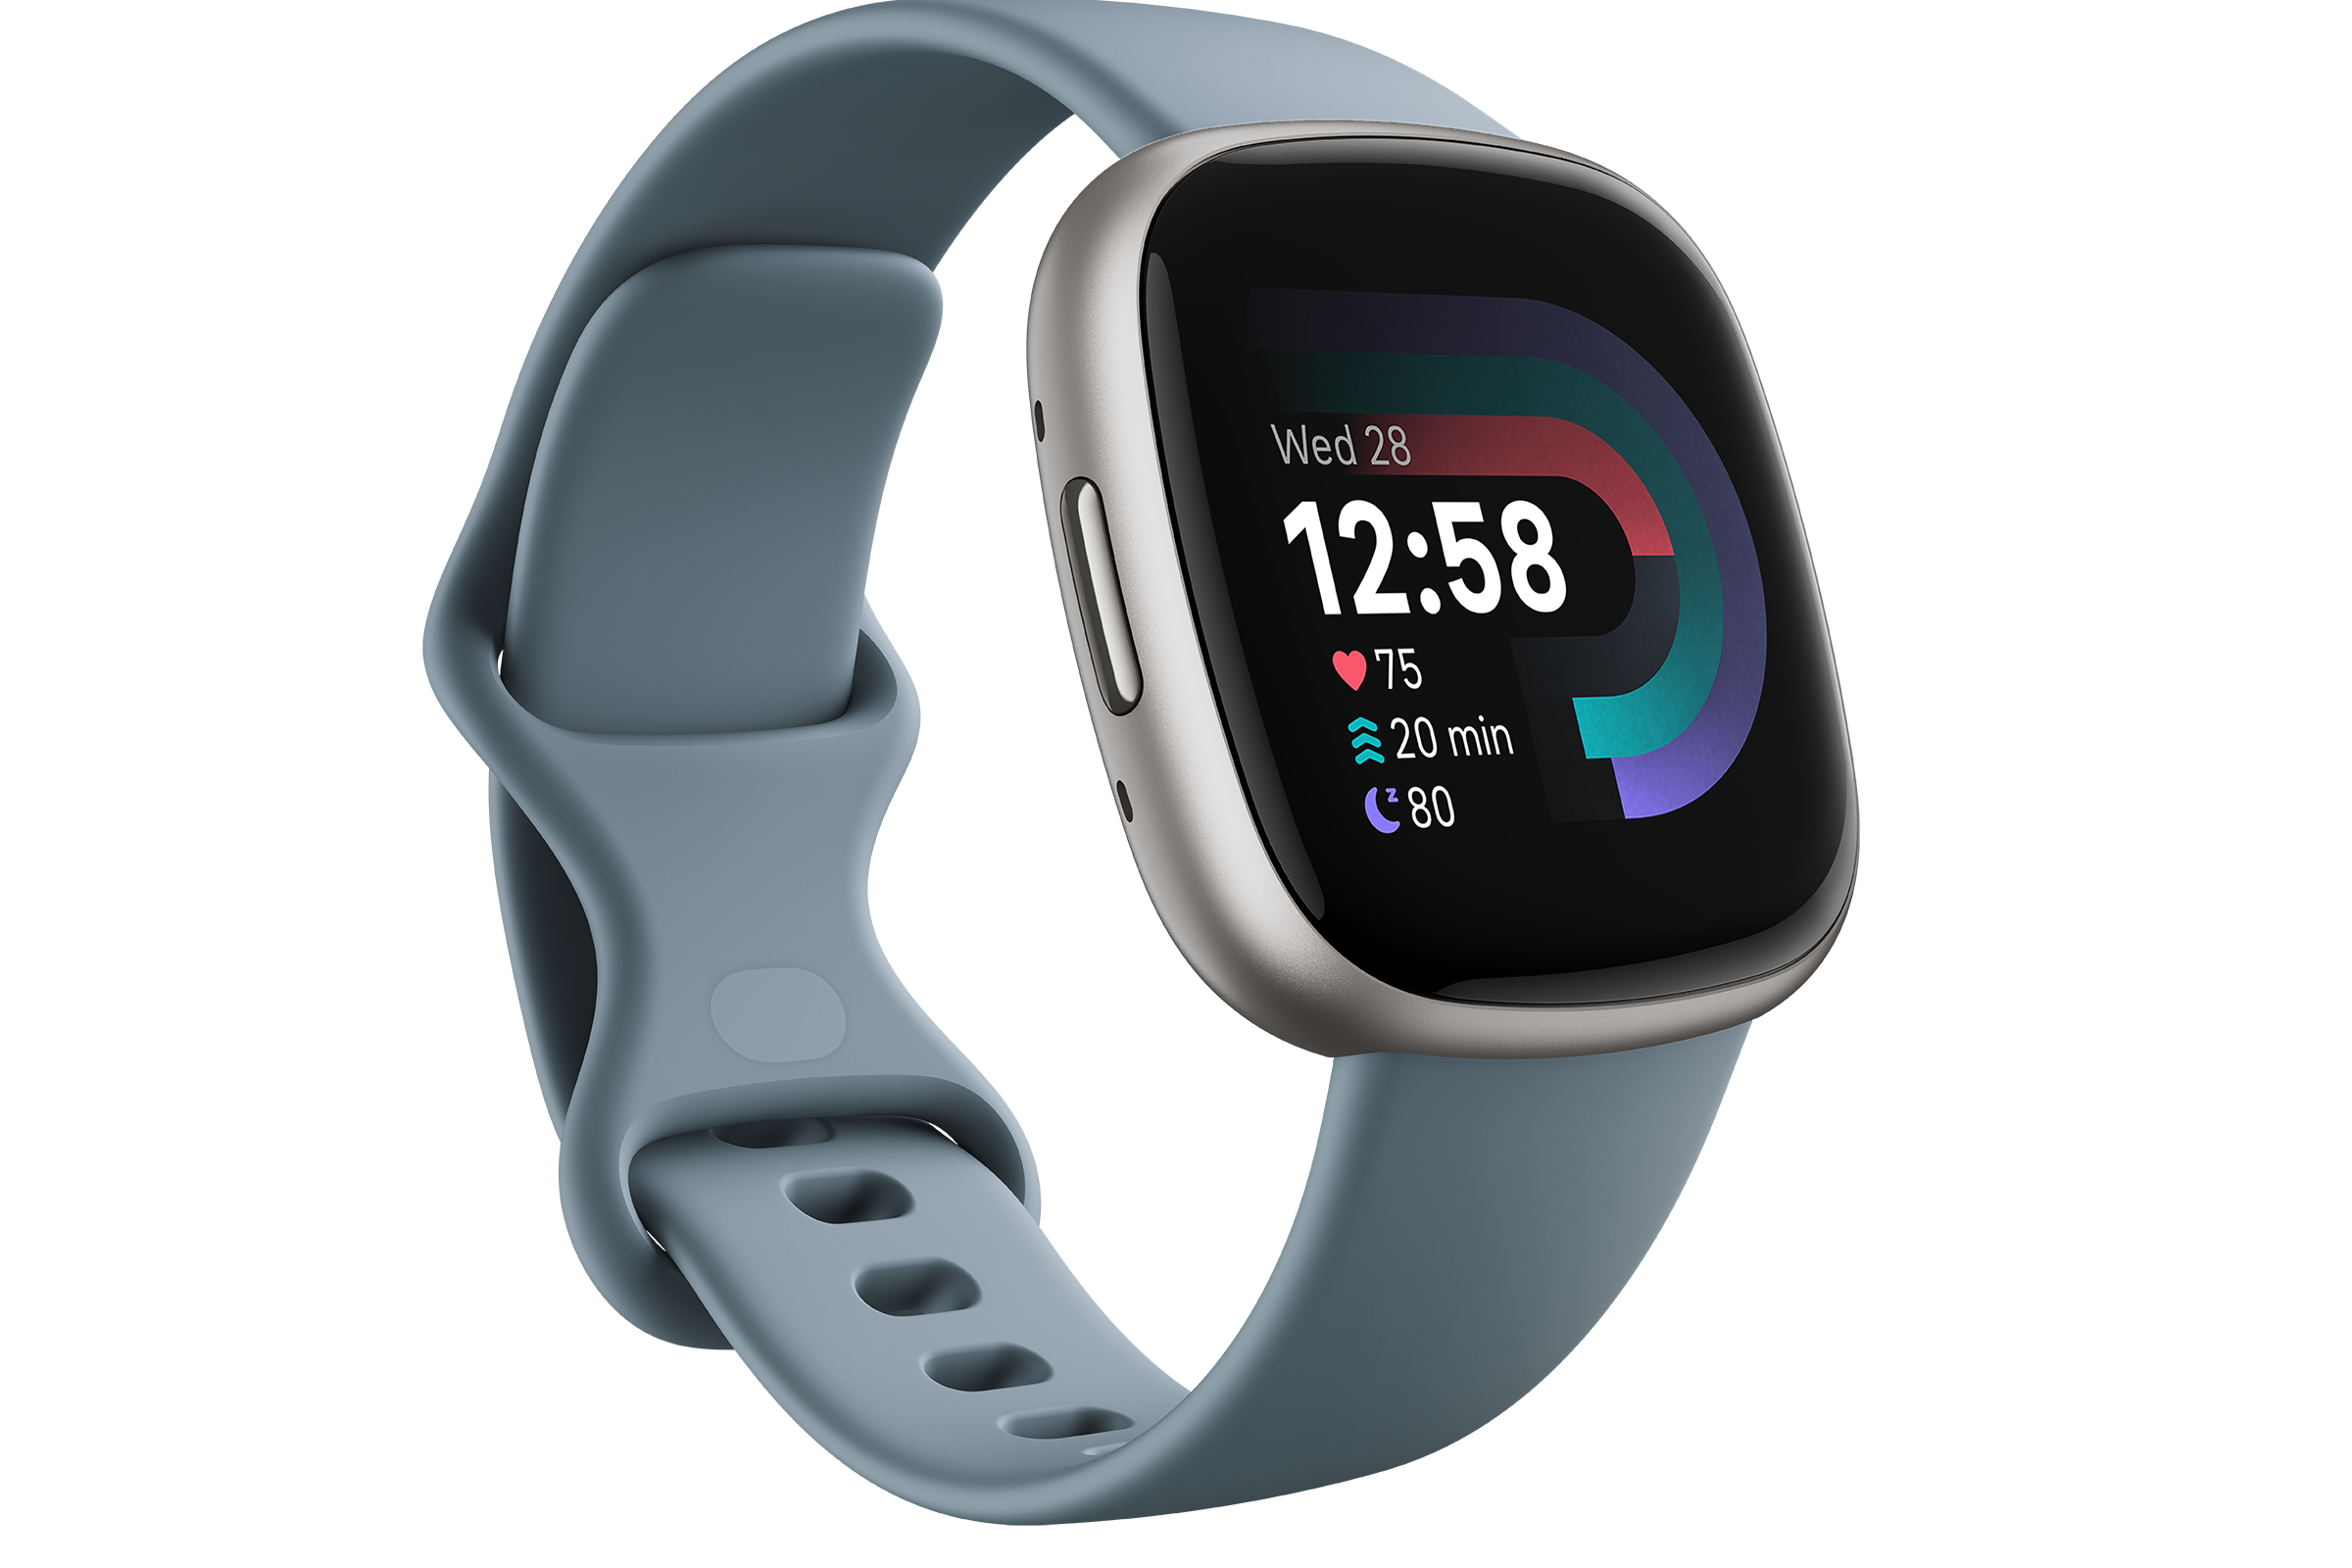 Fitbit Versa render showing a clock face